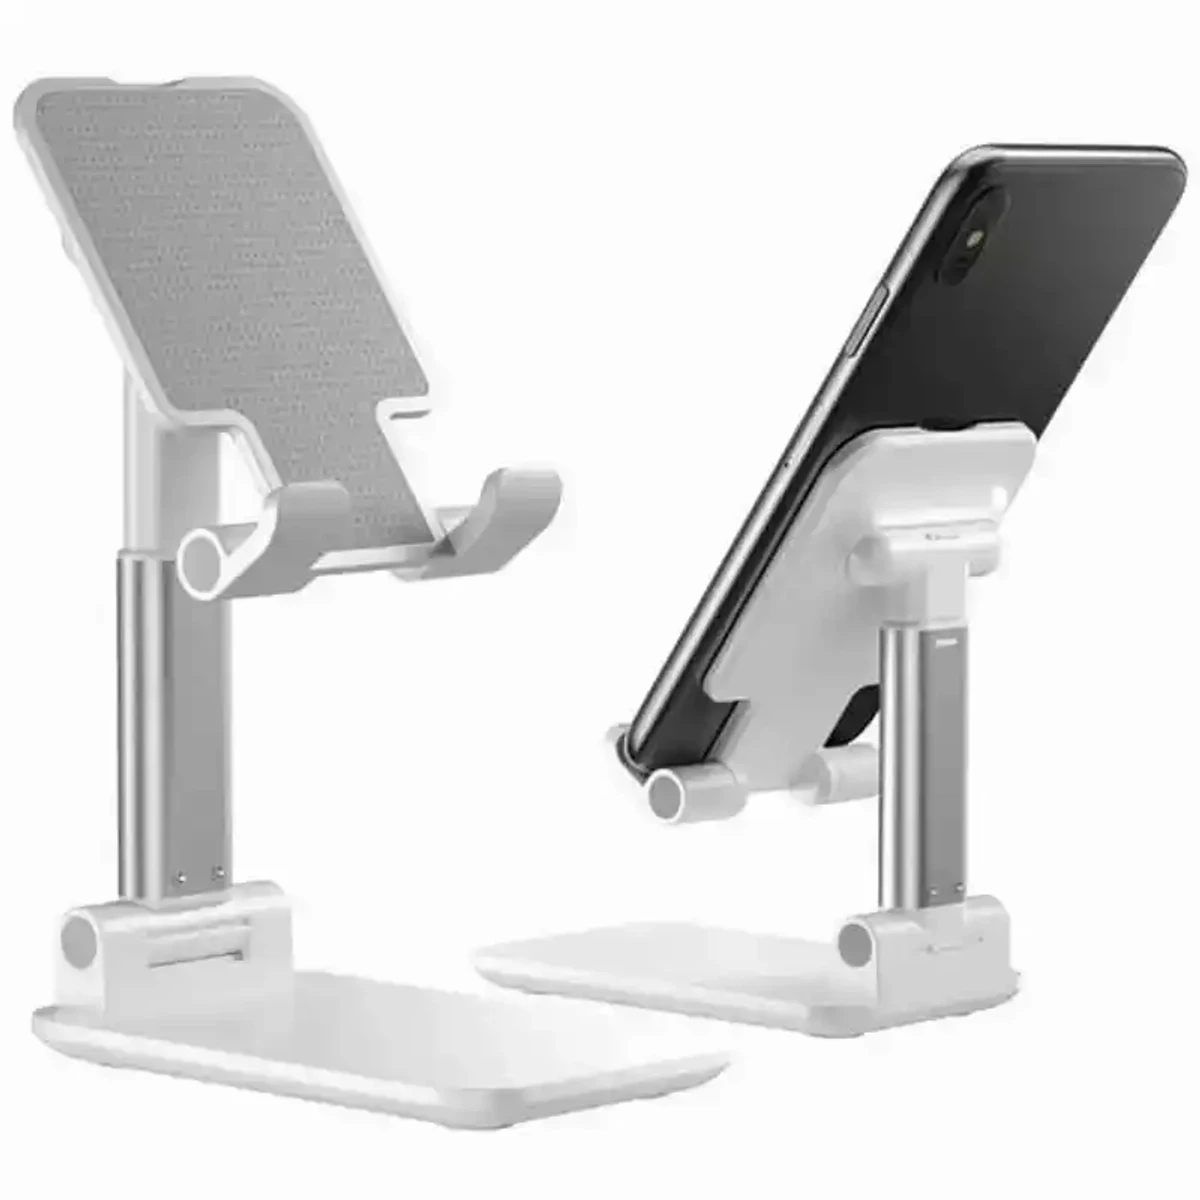 Foldable-desktop-mobile-stand